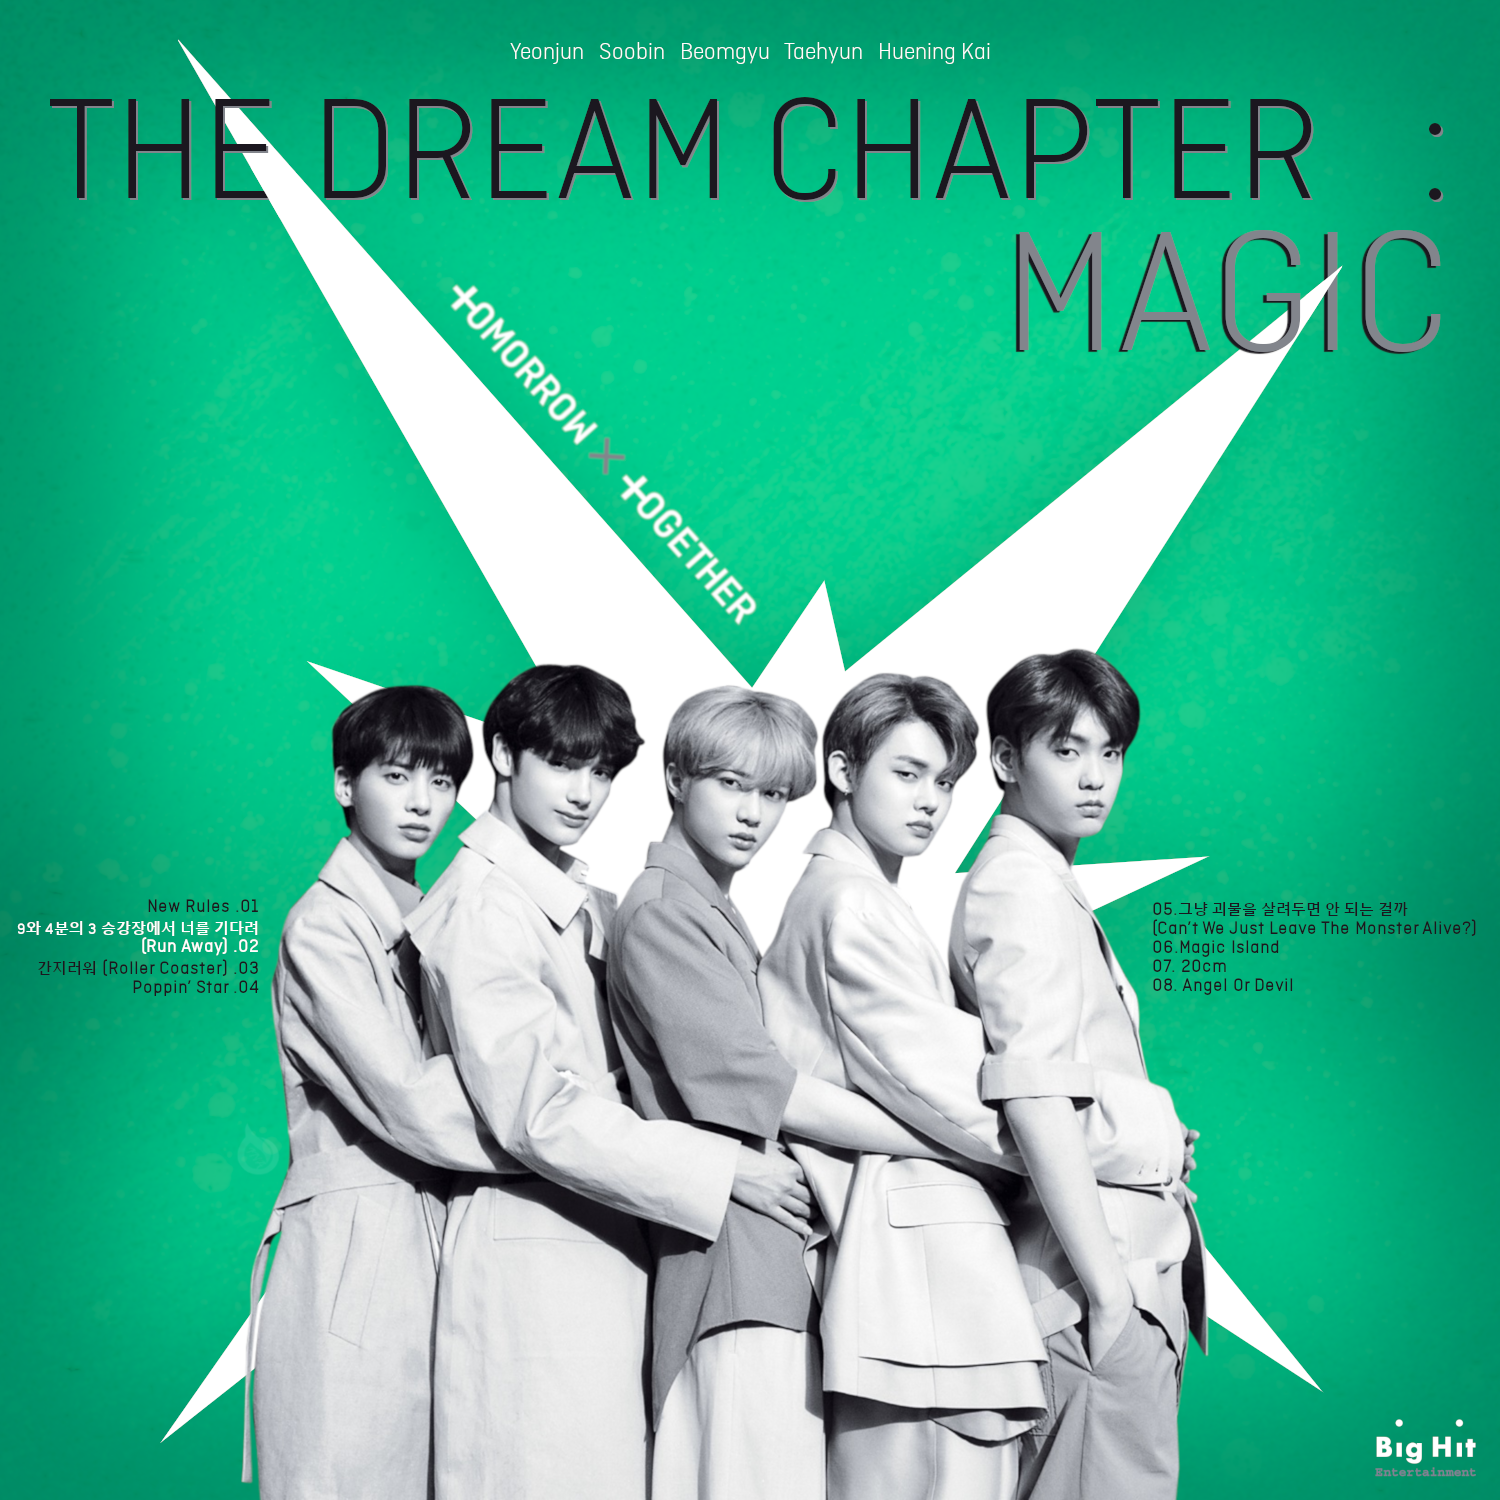 Runaway txt. Альбом New Rules txt. The Dream Chapter: Magic. The Dream Chapter: Magic txt альбом купить. Album Art the Dream Chapter: Magic New Rules.